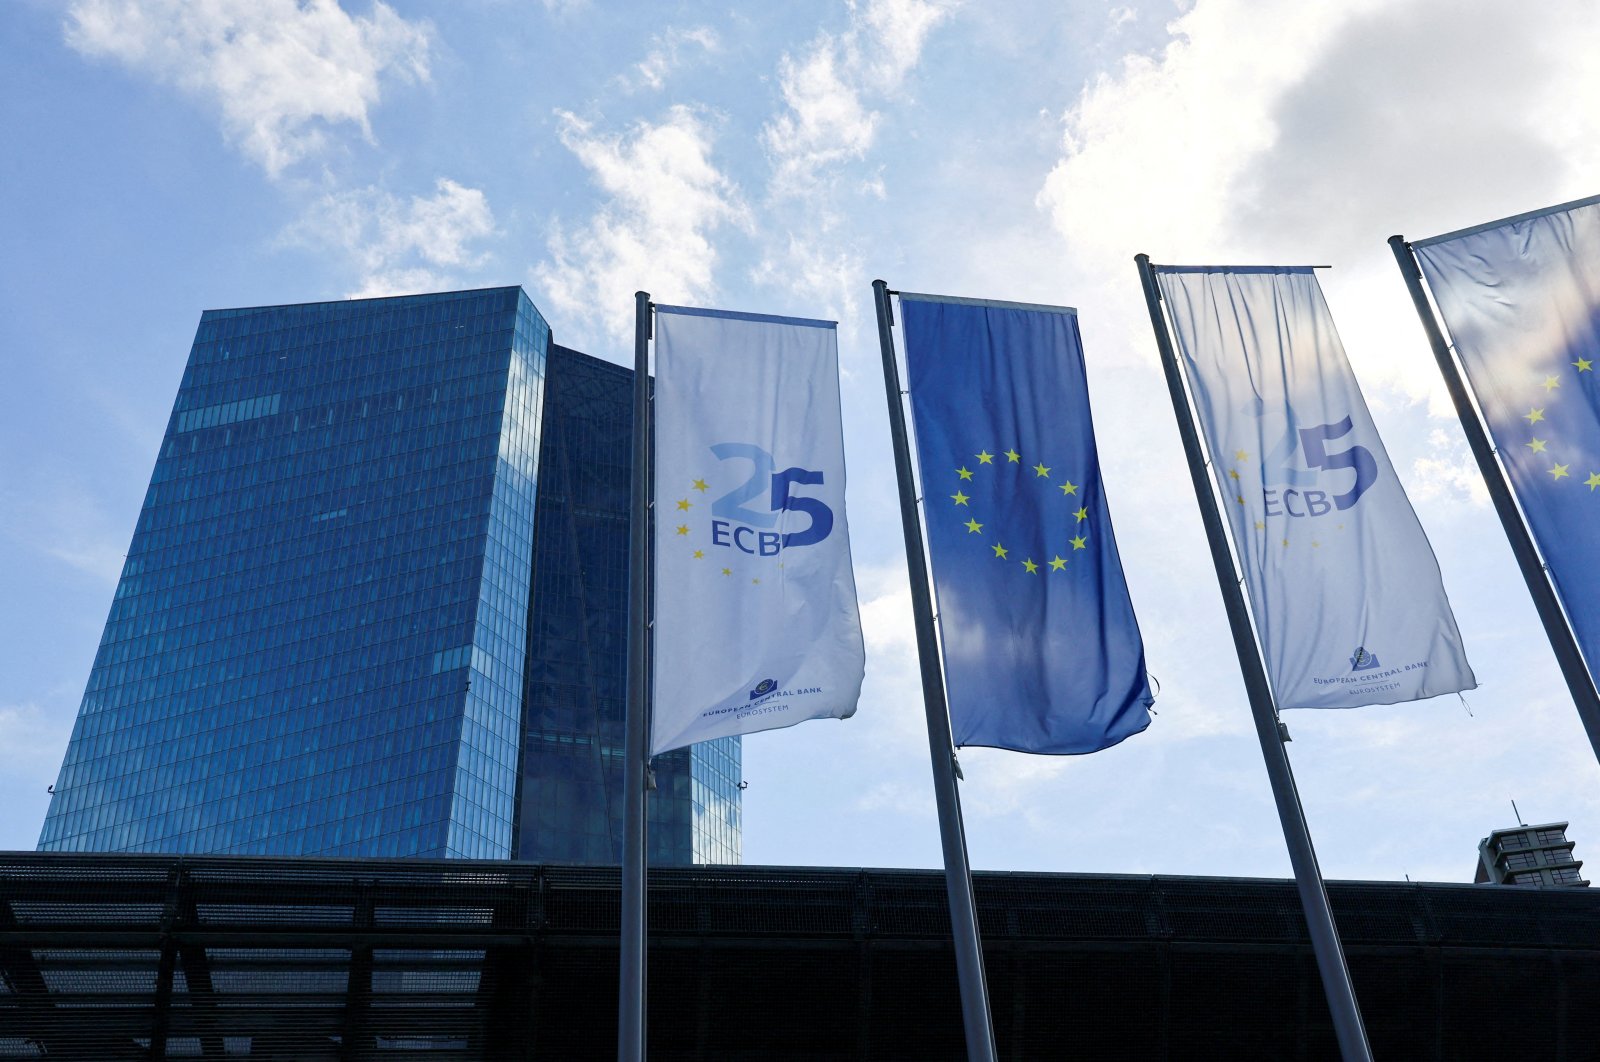 ECB ready to start cutting interest rates: Chief economist